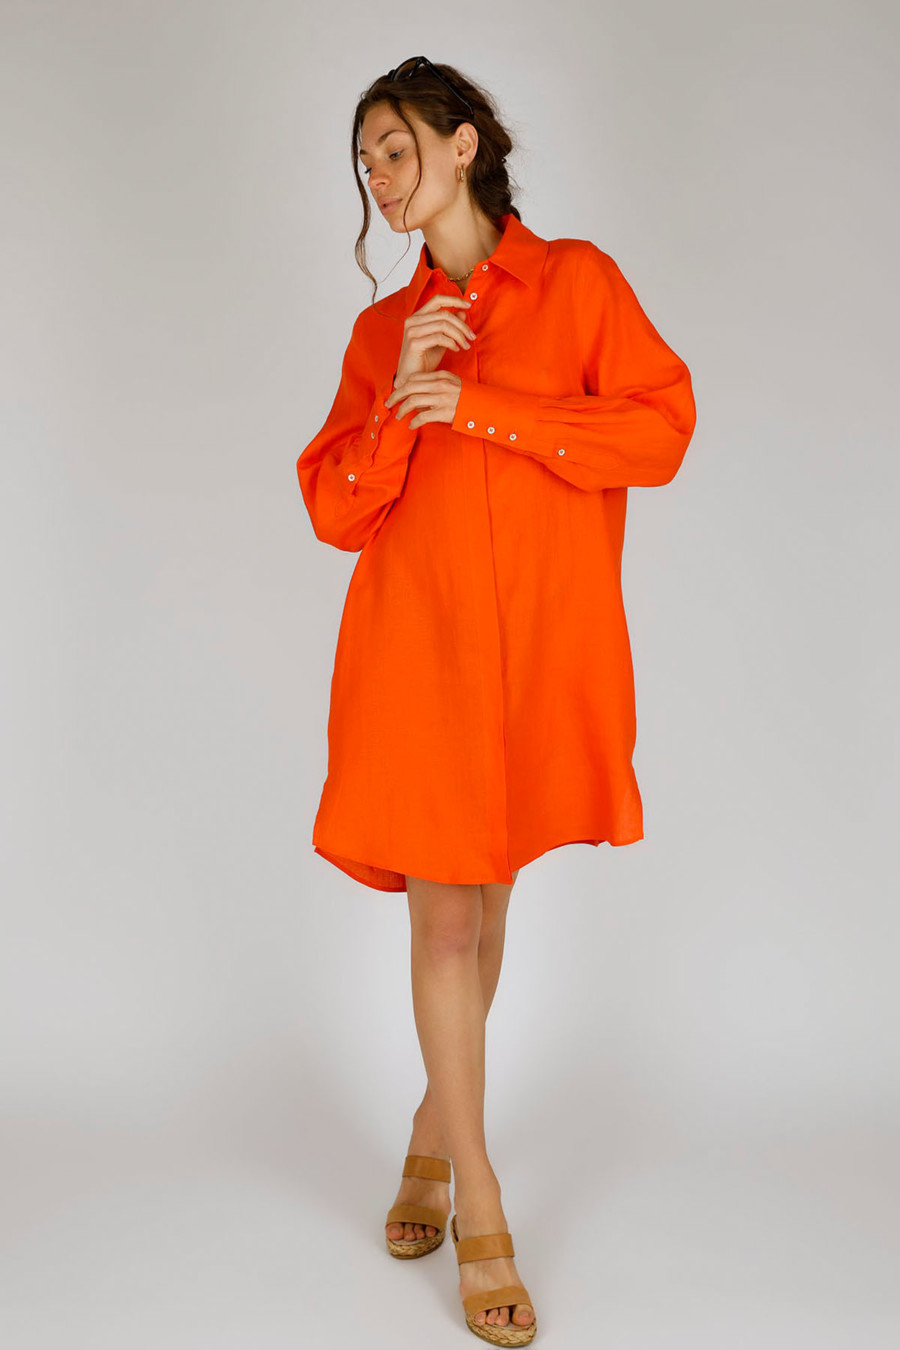 LORA DRESS - Oversize shirt blouse dress in finest linen fabric - Colour: Tomato